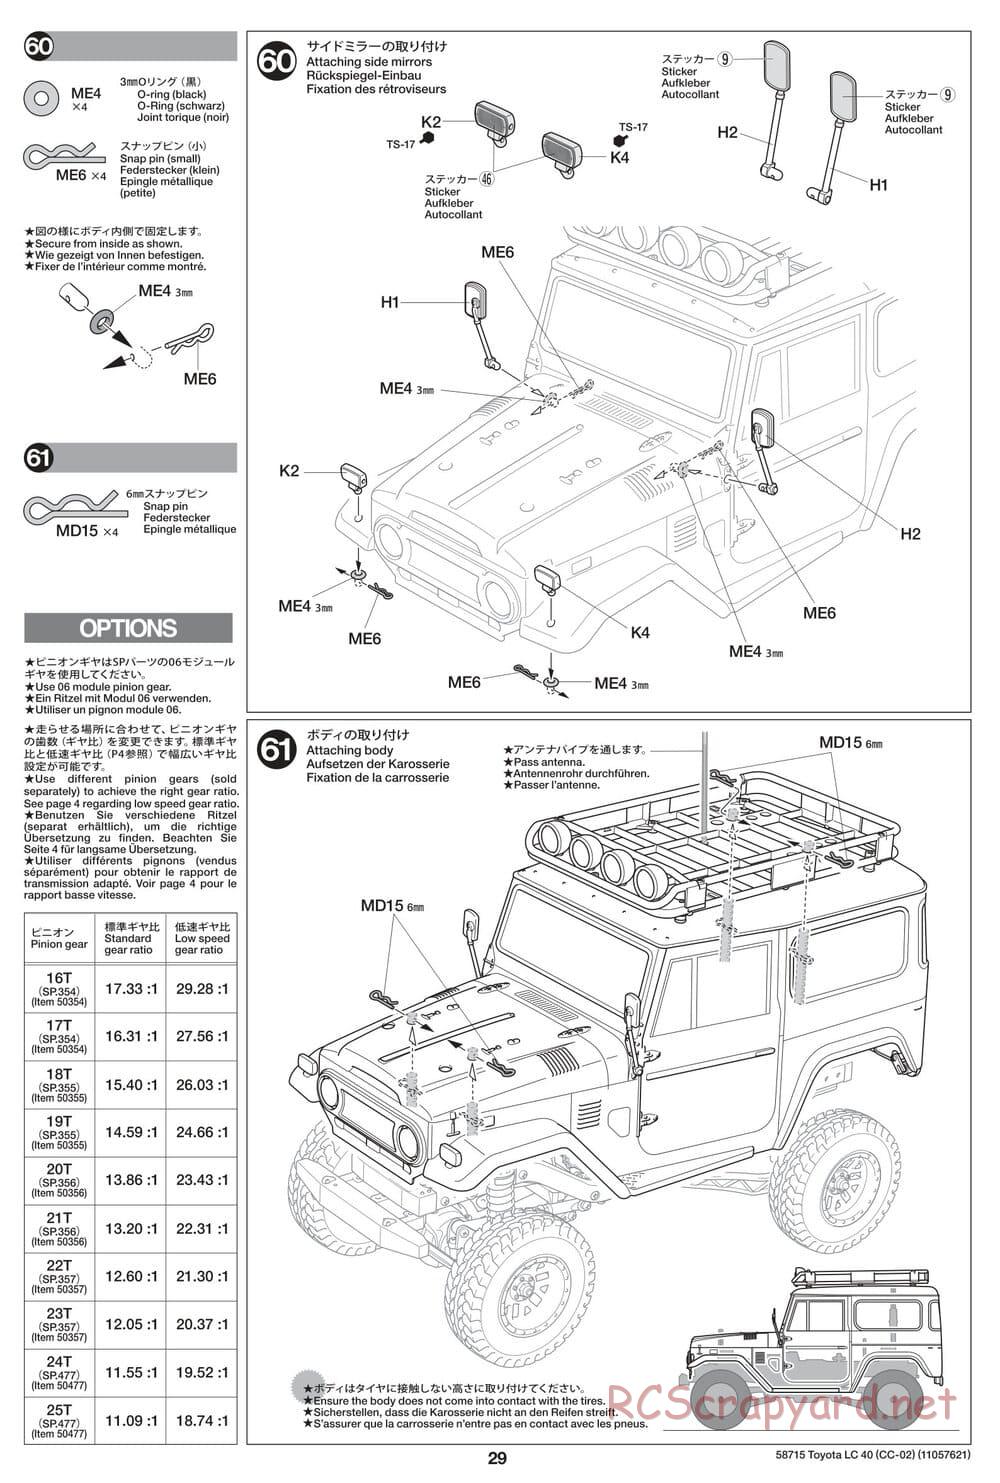 Tamiya - Toyota Land Cruiser 40 - CC-02 Chassis - Manual - Page 29